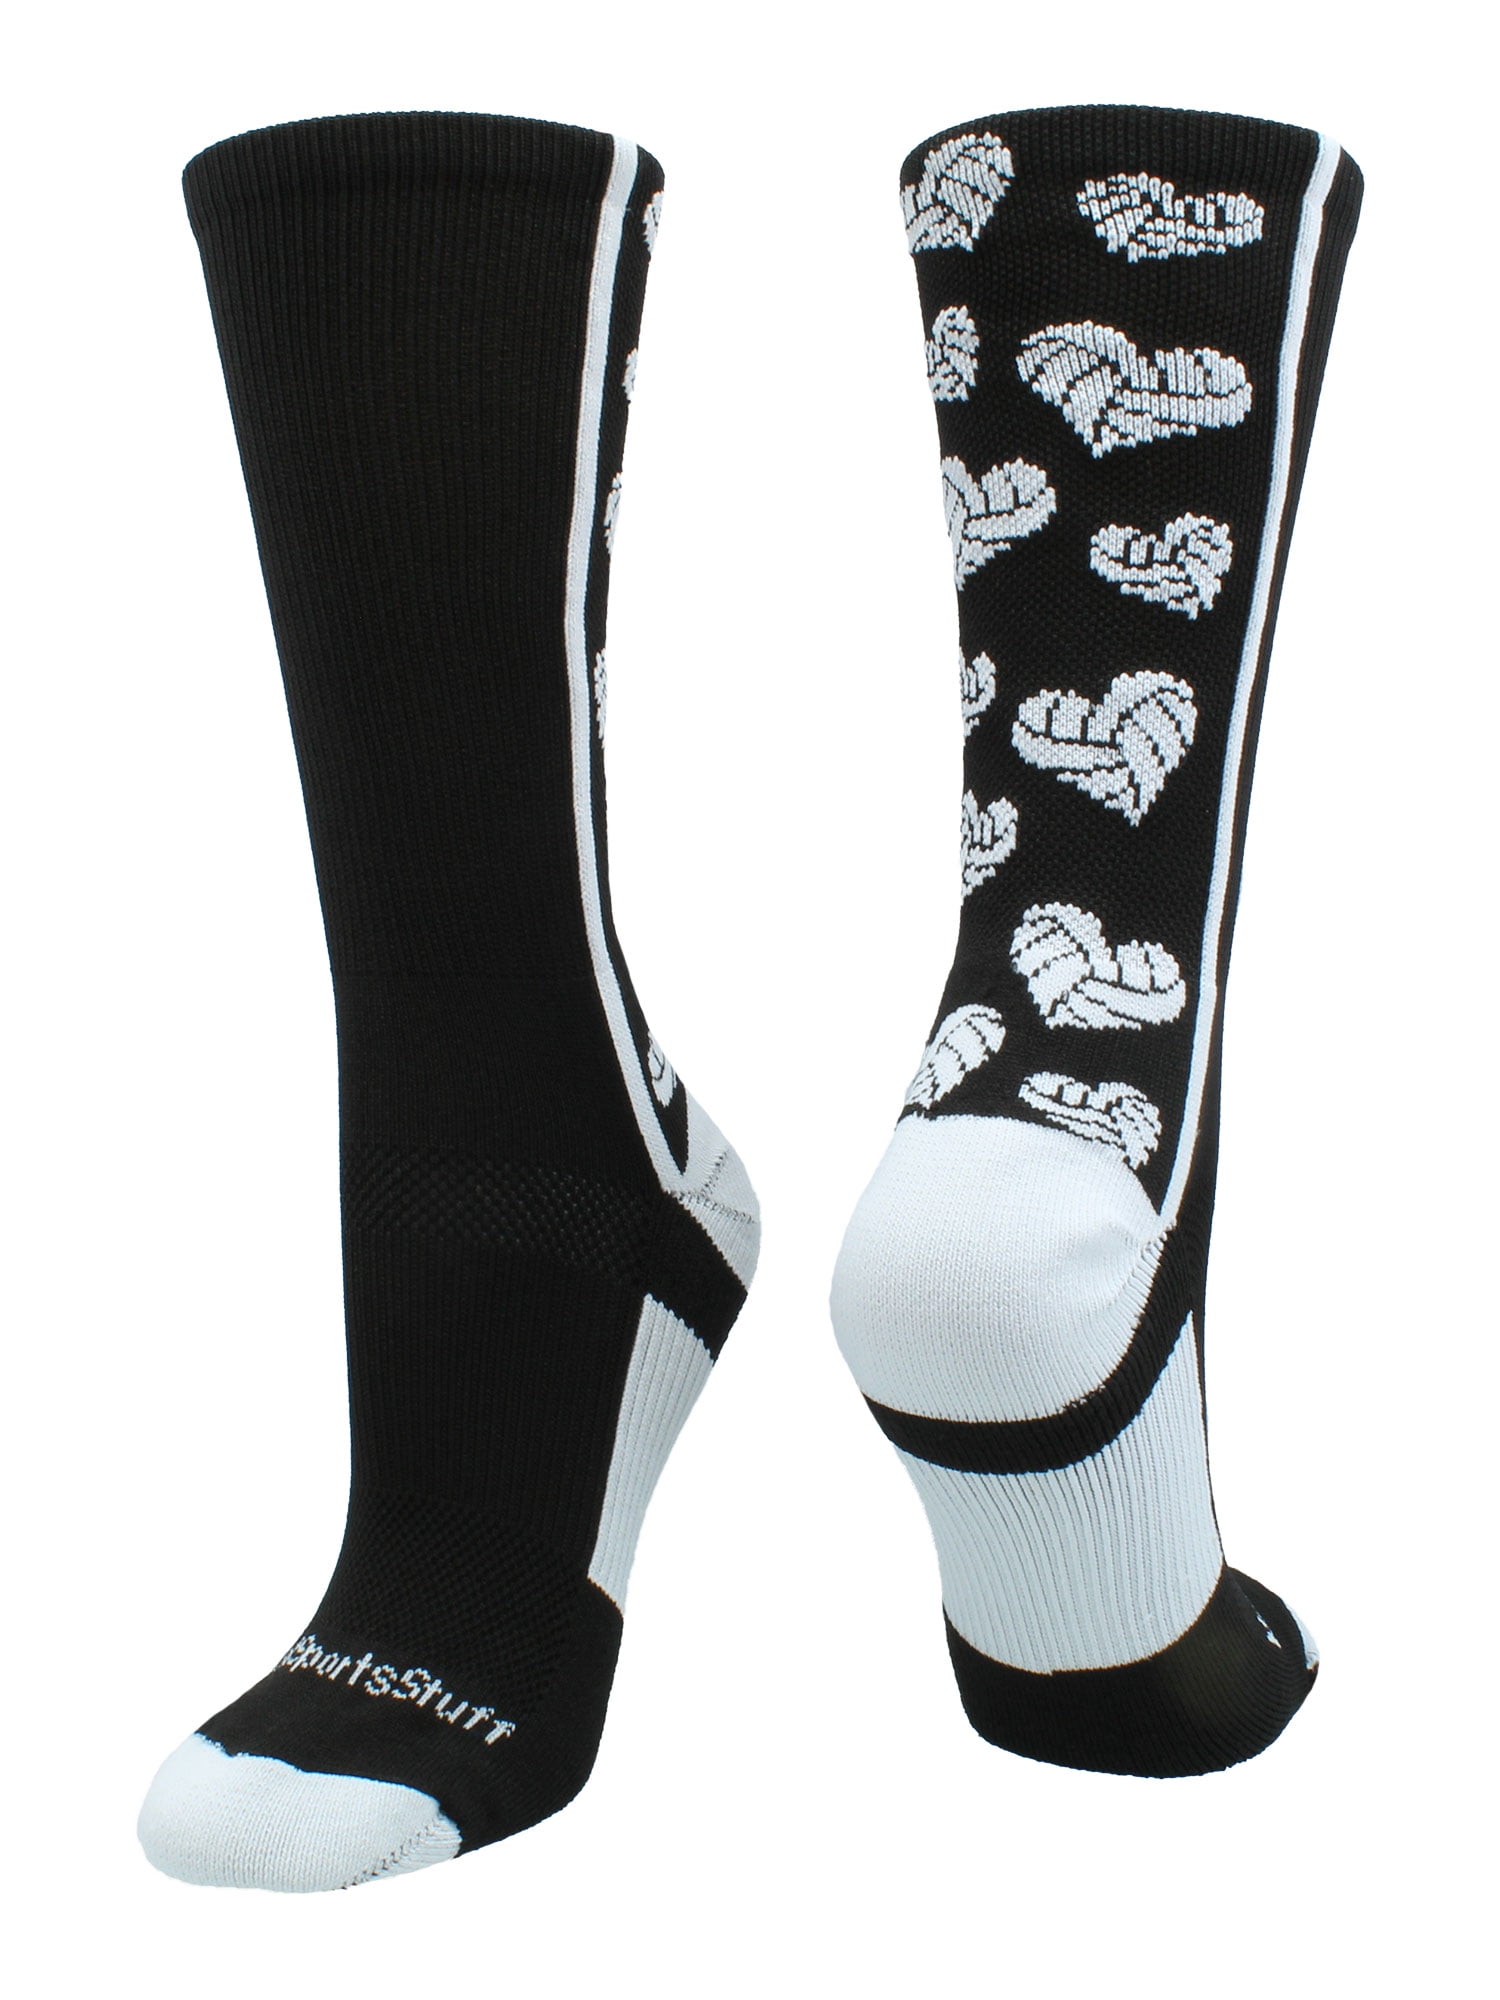 Crazy Love Volleyball Hearts Crew Socks (Black/White, Small) - Walmart.com